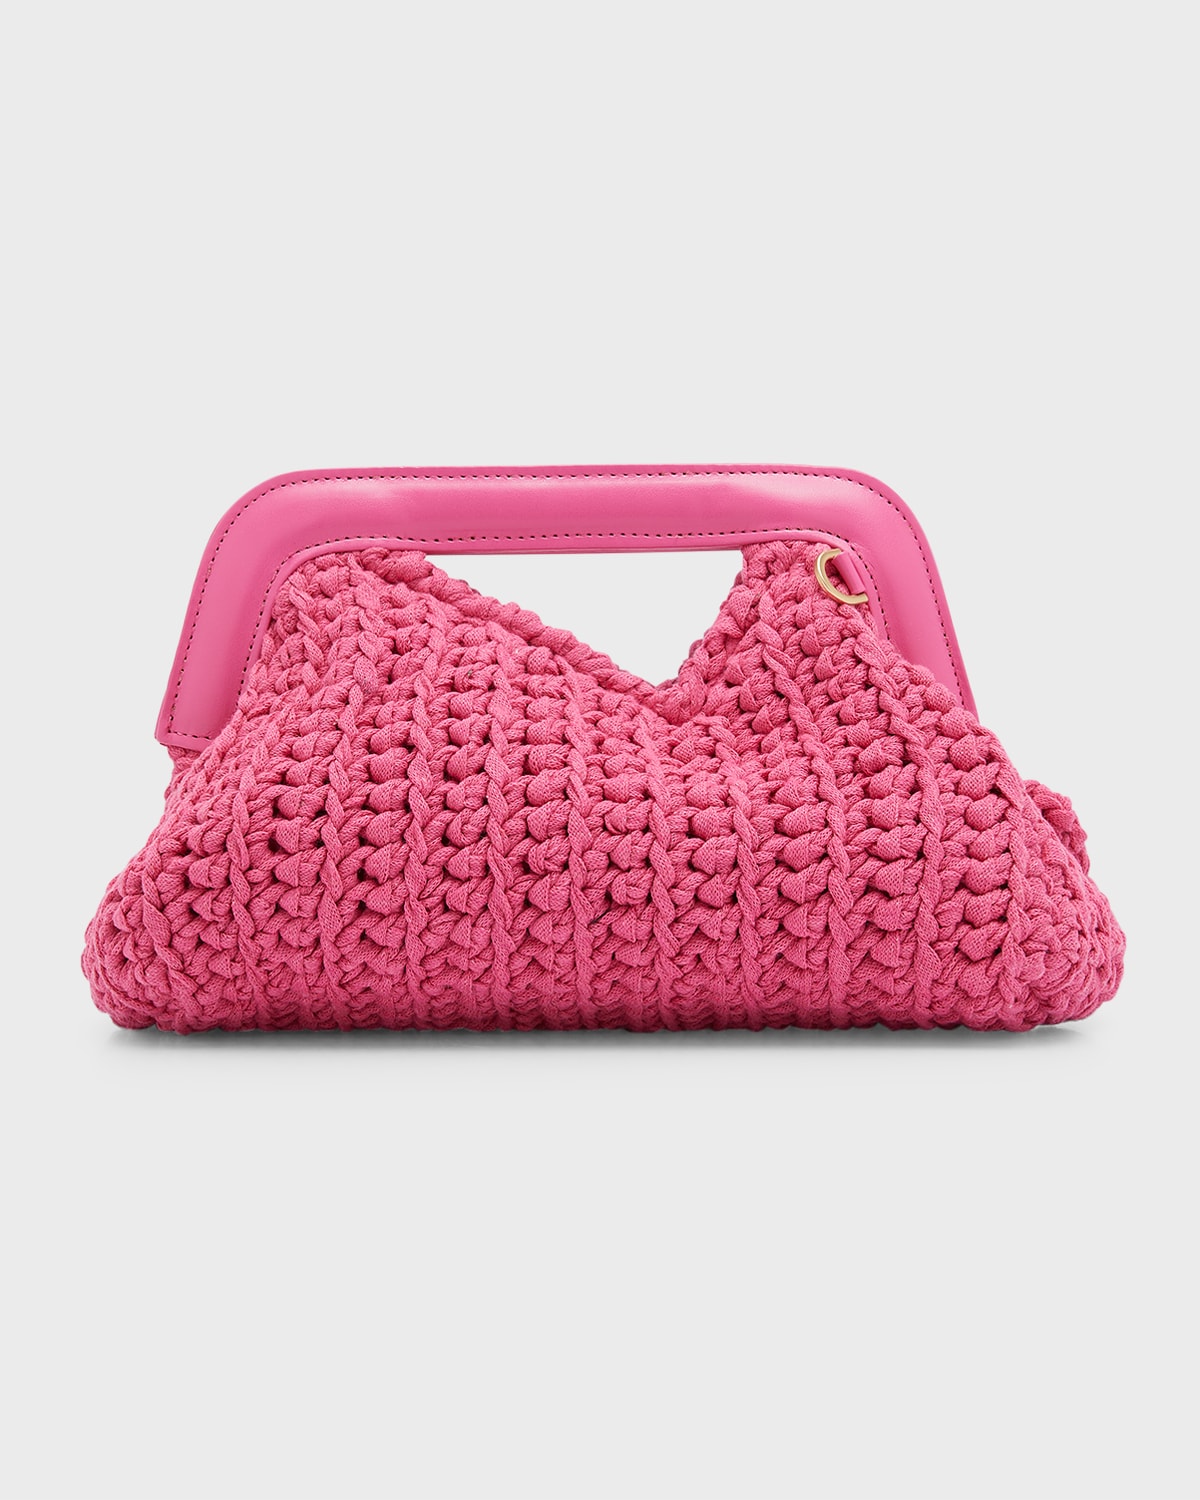 Kooreloo The Mediterraneo Crochet Clutch Bag with Strap